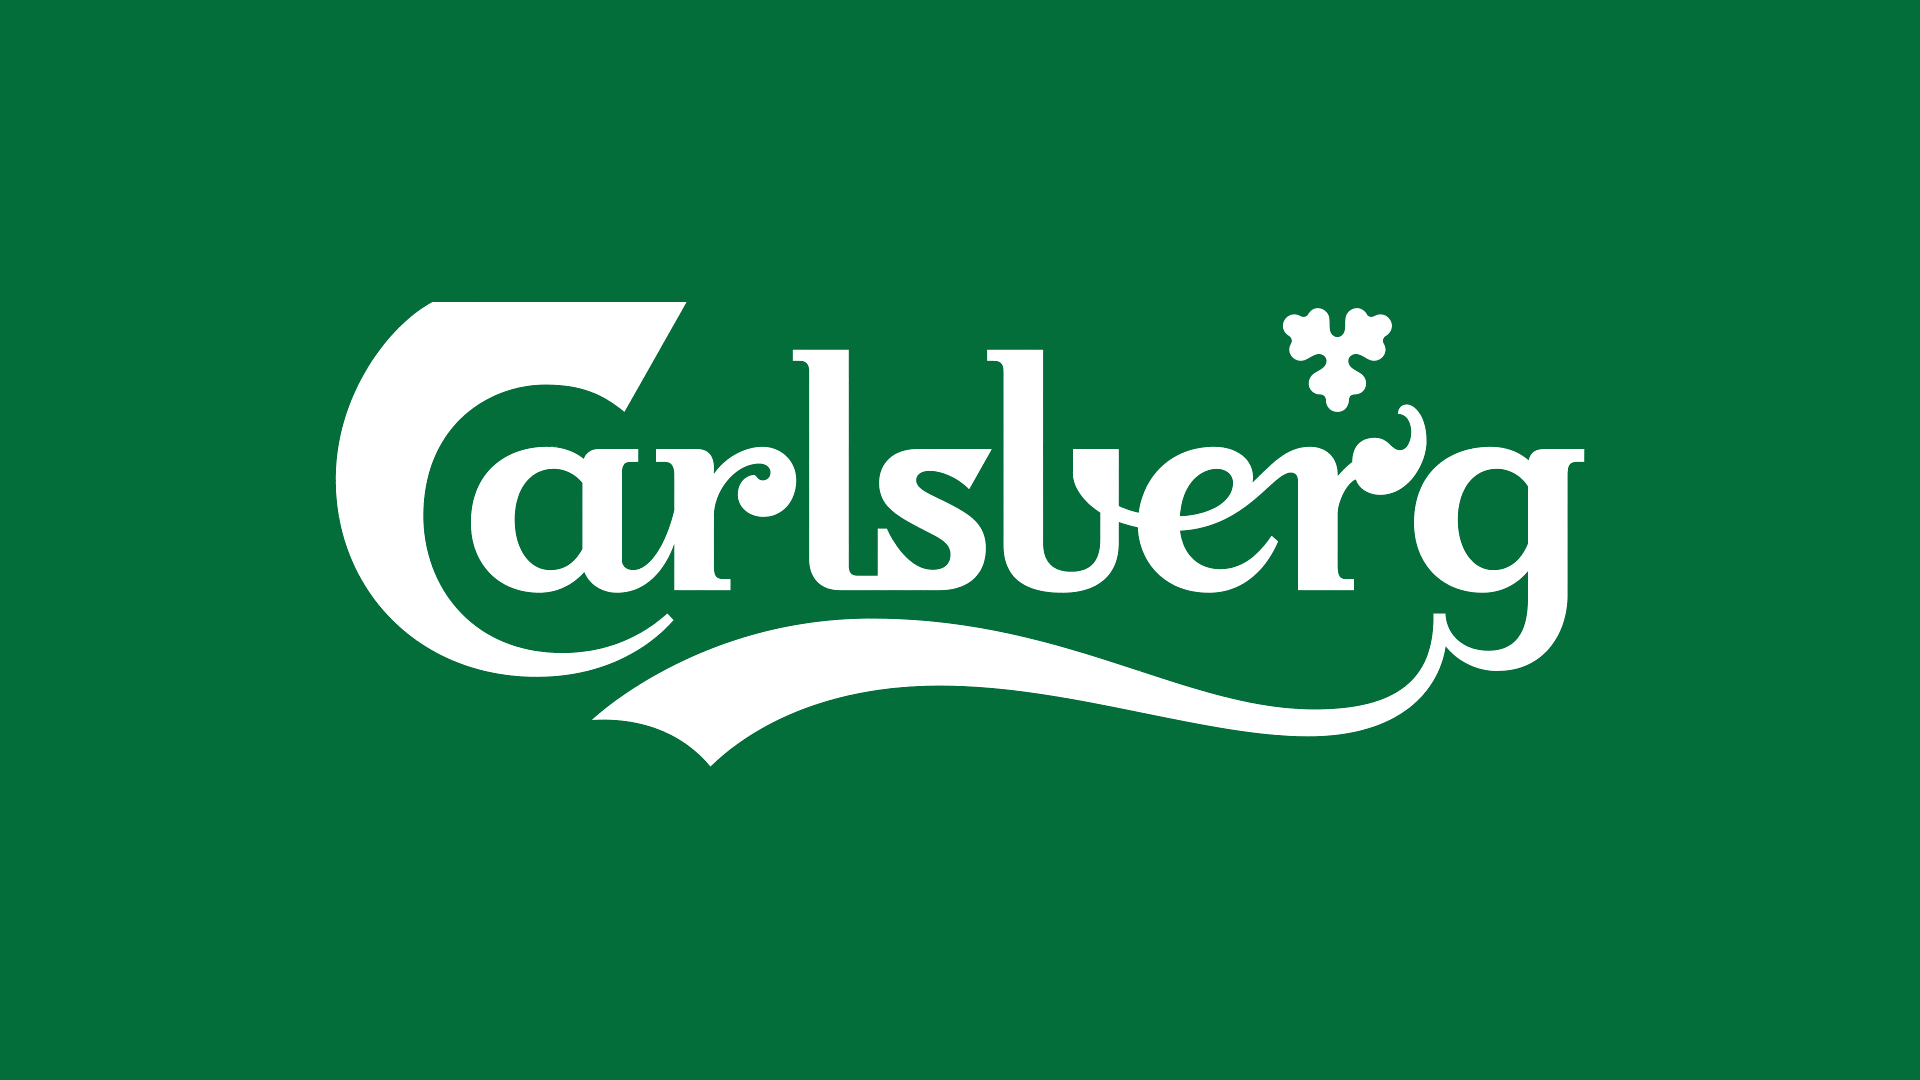 Green Beer Logo - Brand New: New Logo and Packaging for Carlsberg